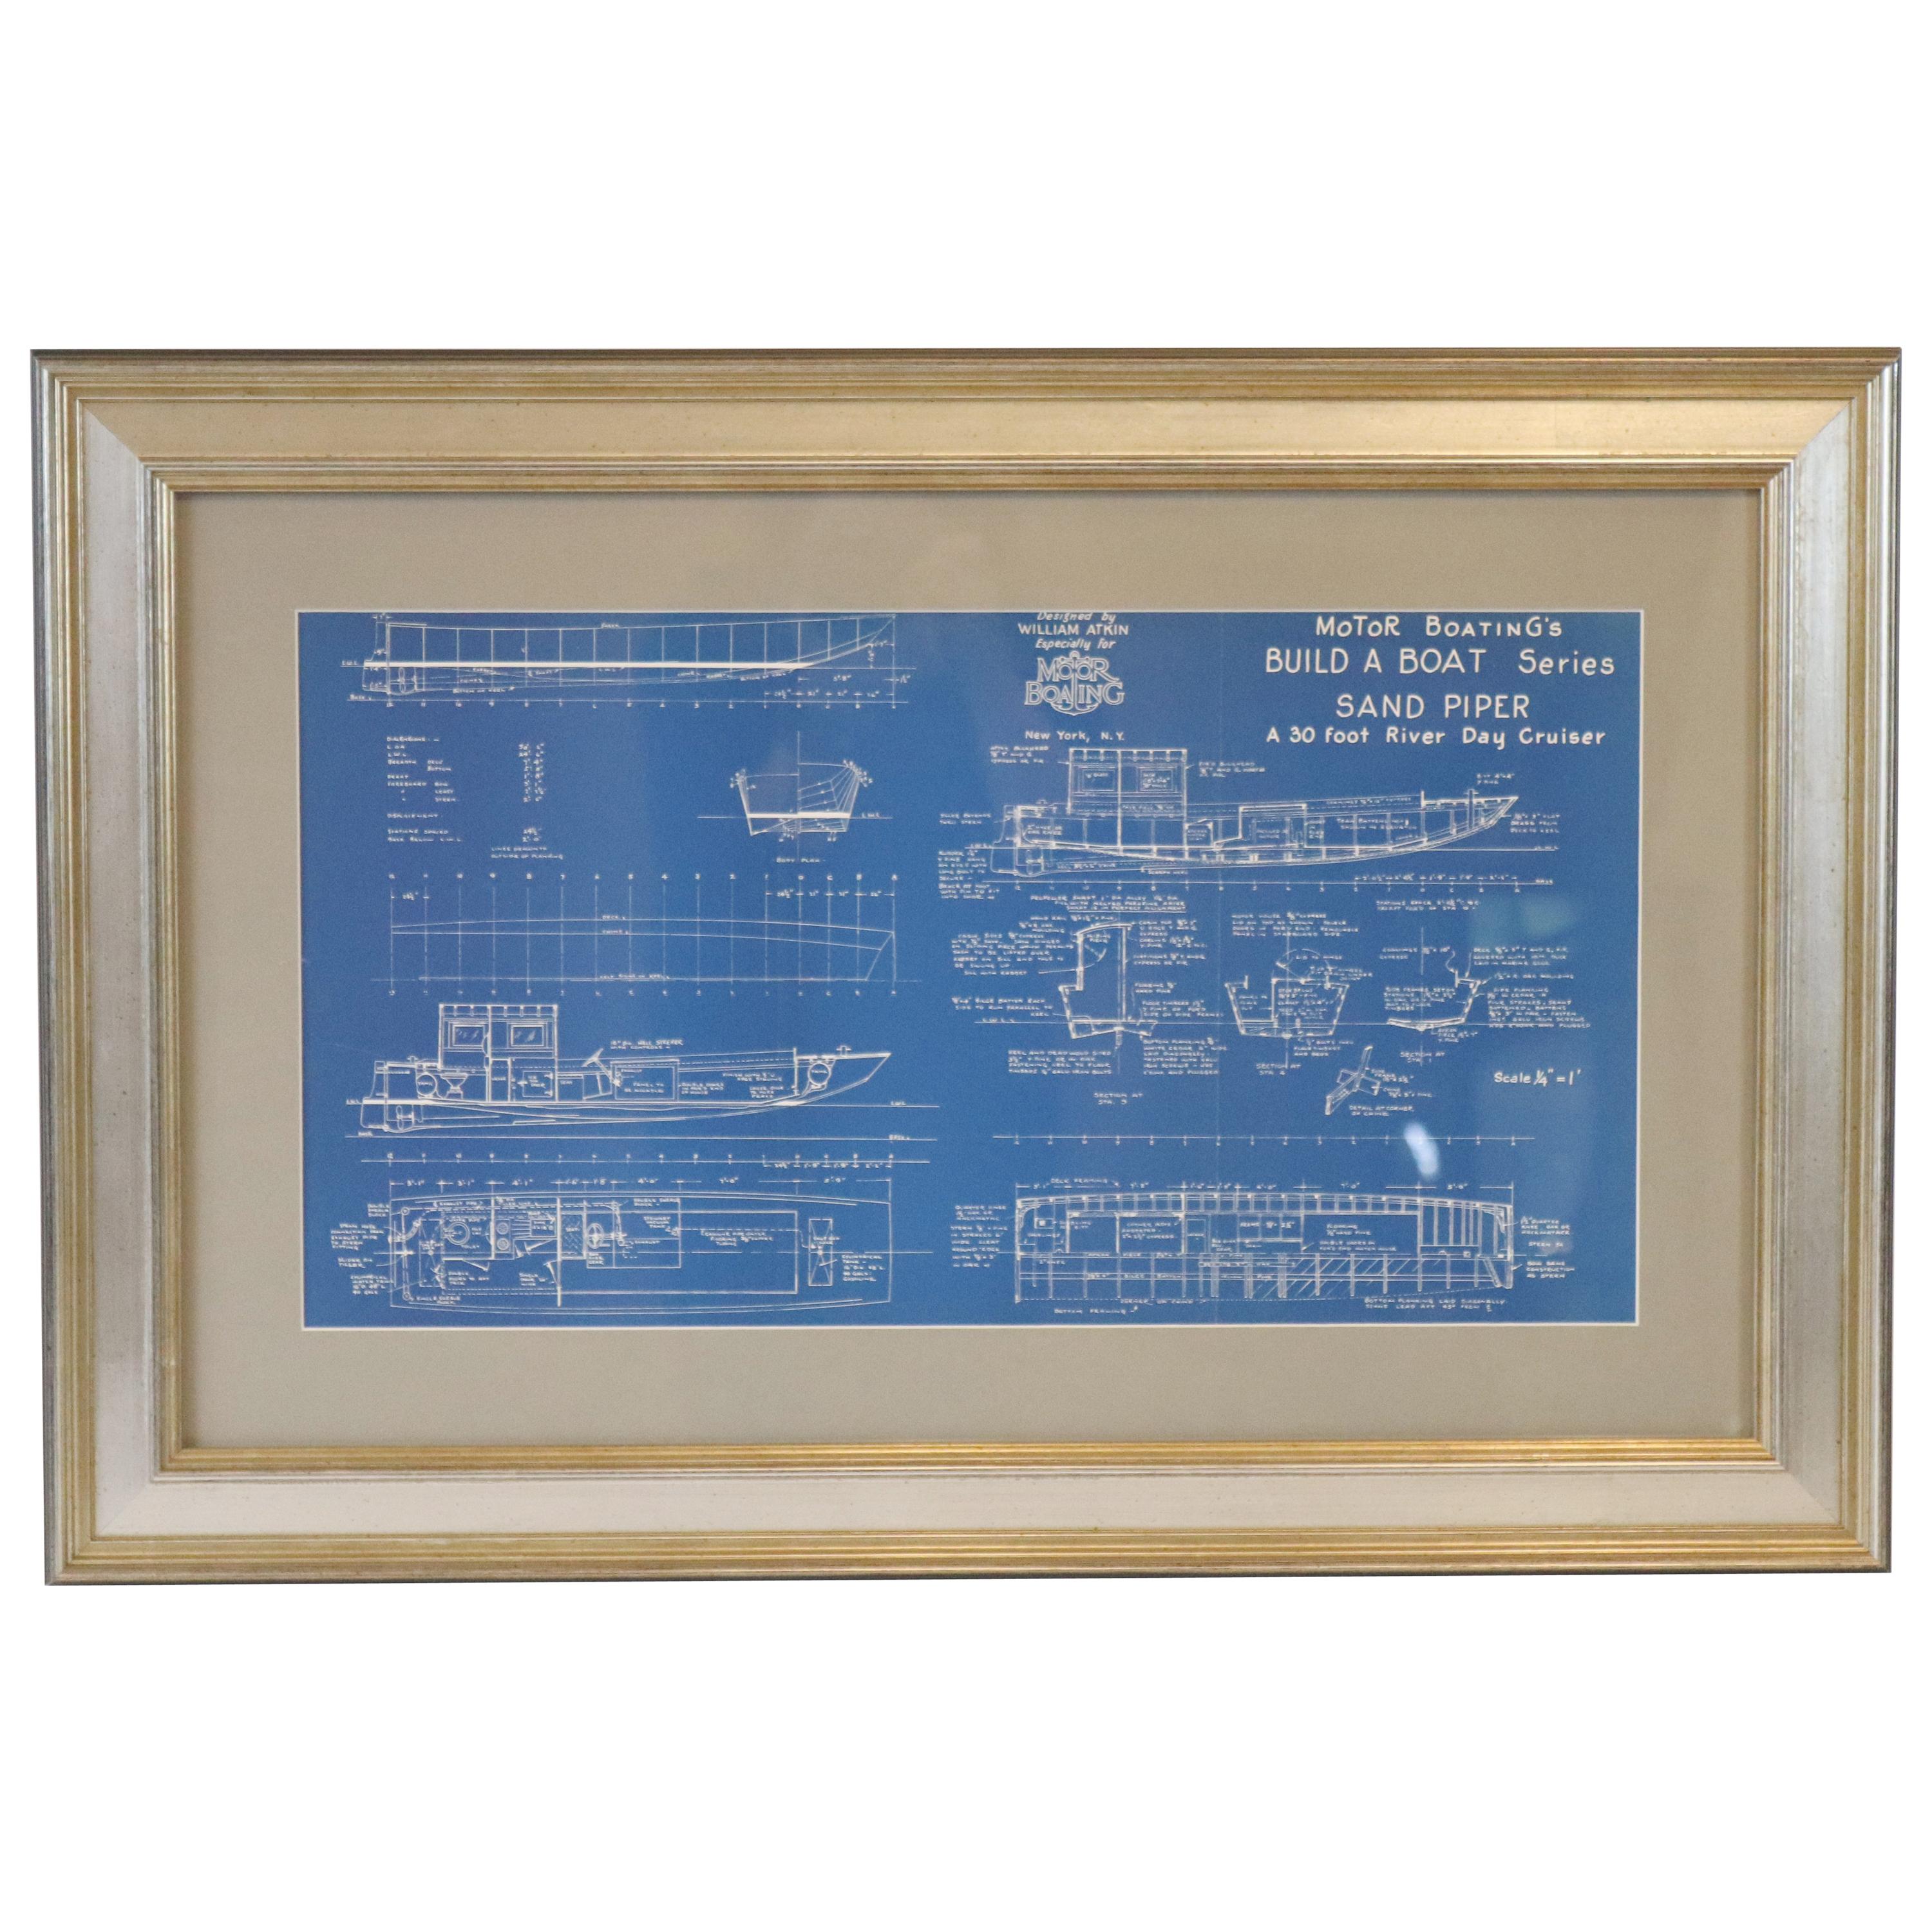 Framed Blueprint of the Yacht Sand Piper